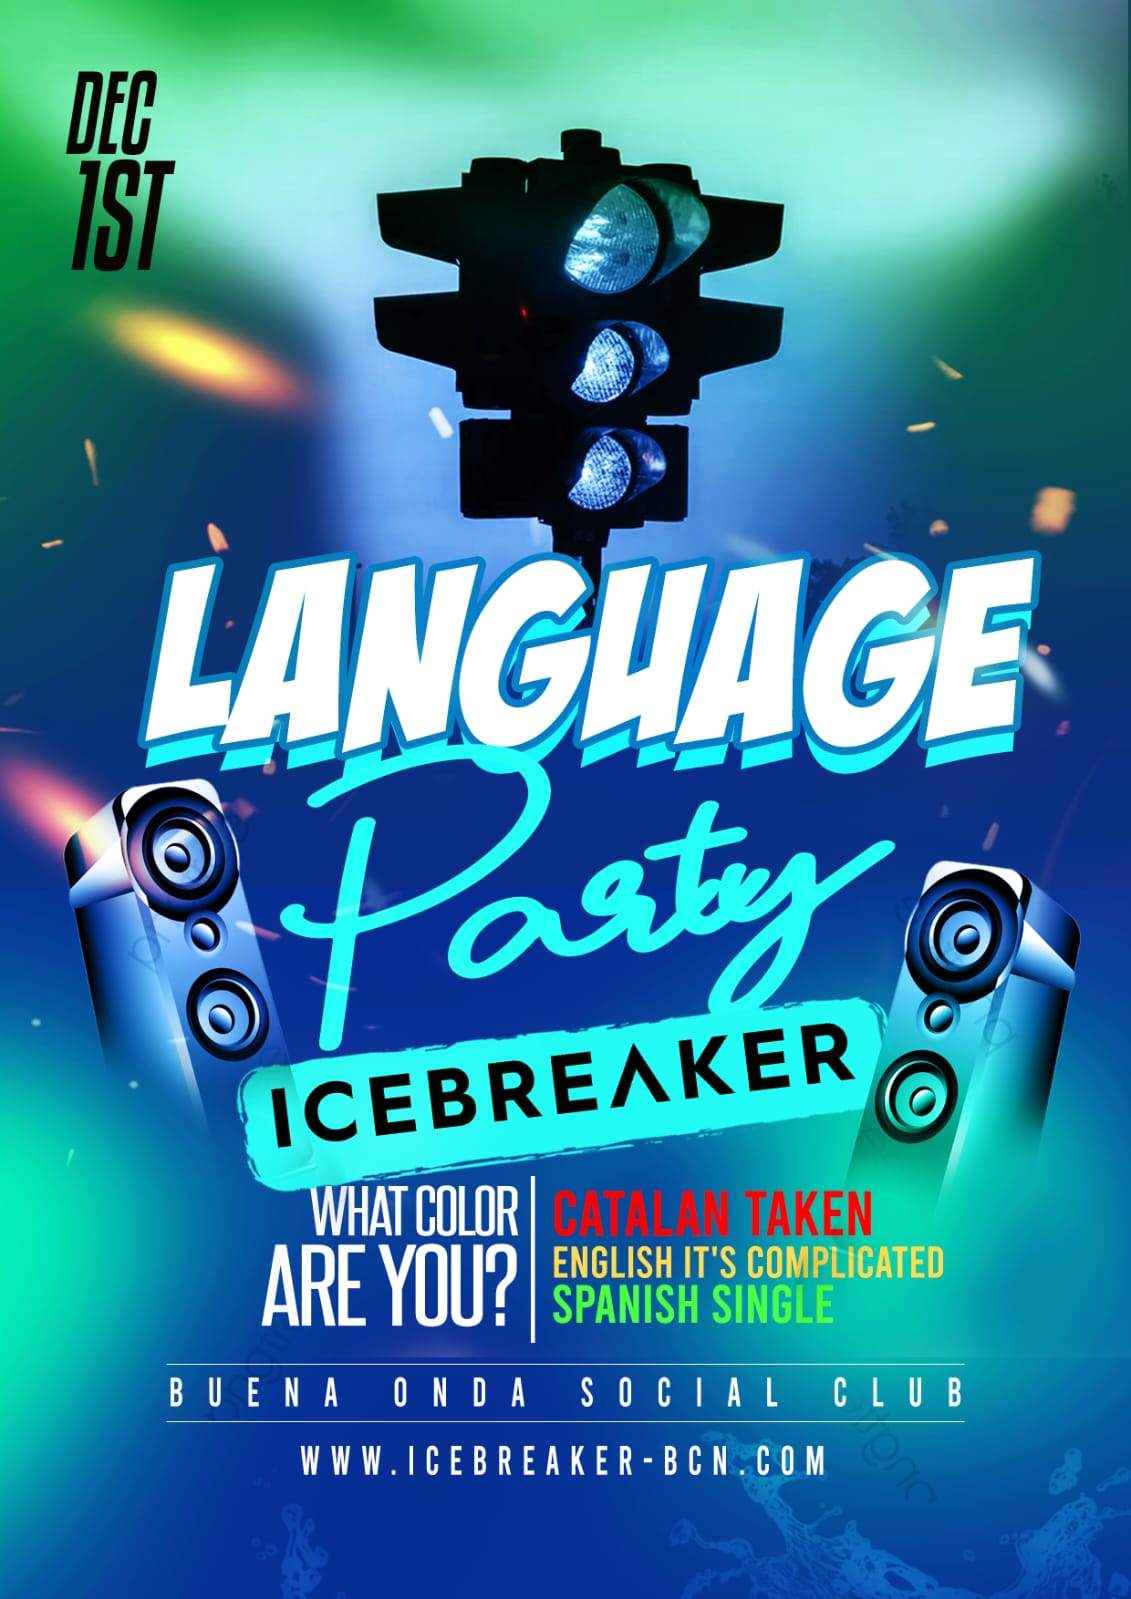 Ice Breaker Language Exchange at Buena Onda Social Club, Barcelona